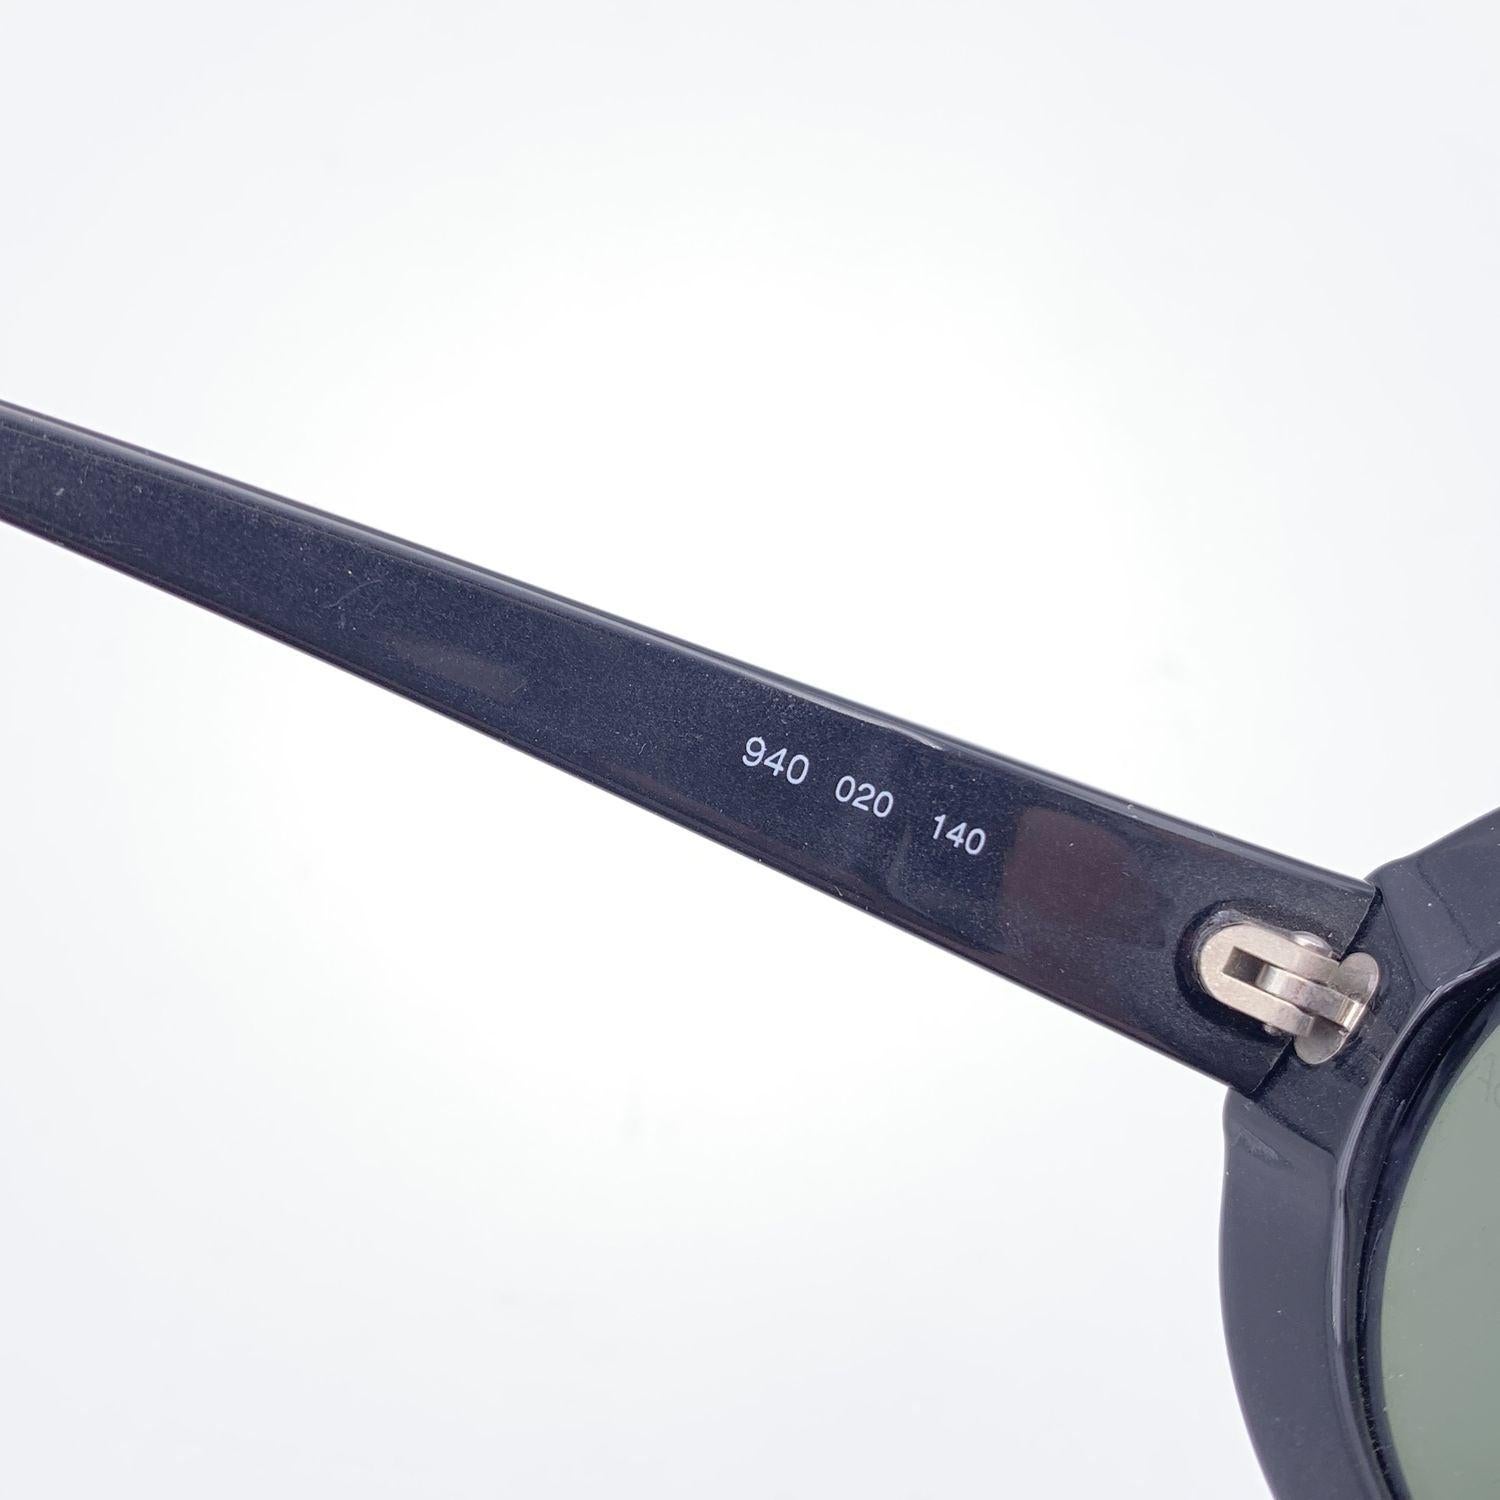 Giorgio Armani Vintage Black Oval Sunglasses 940 020 140 mm 1